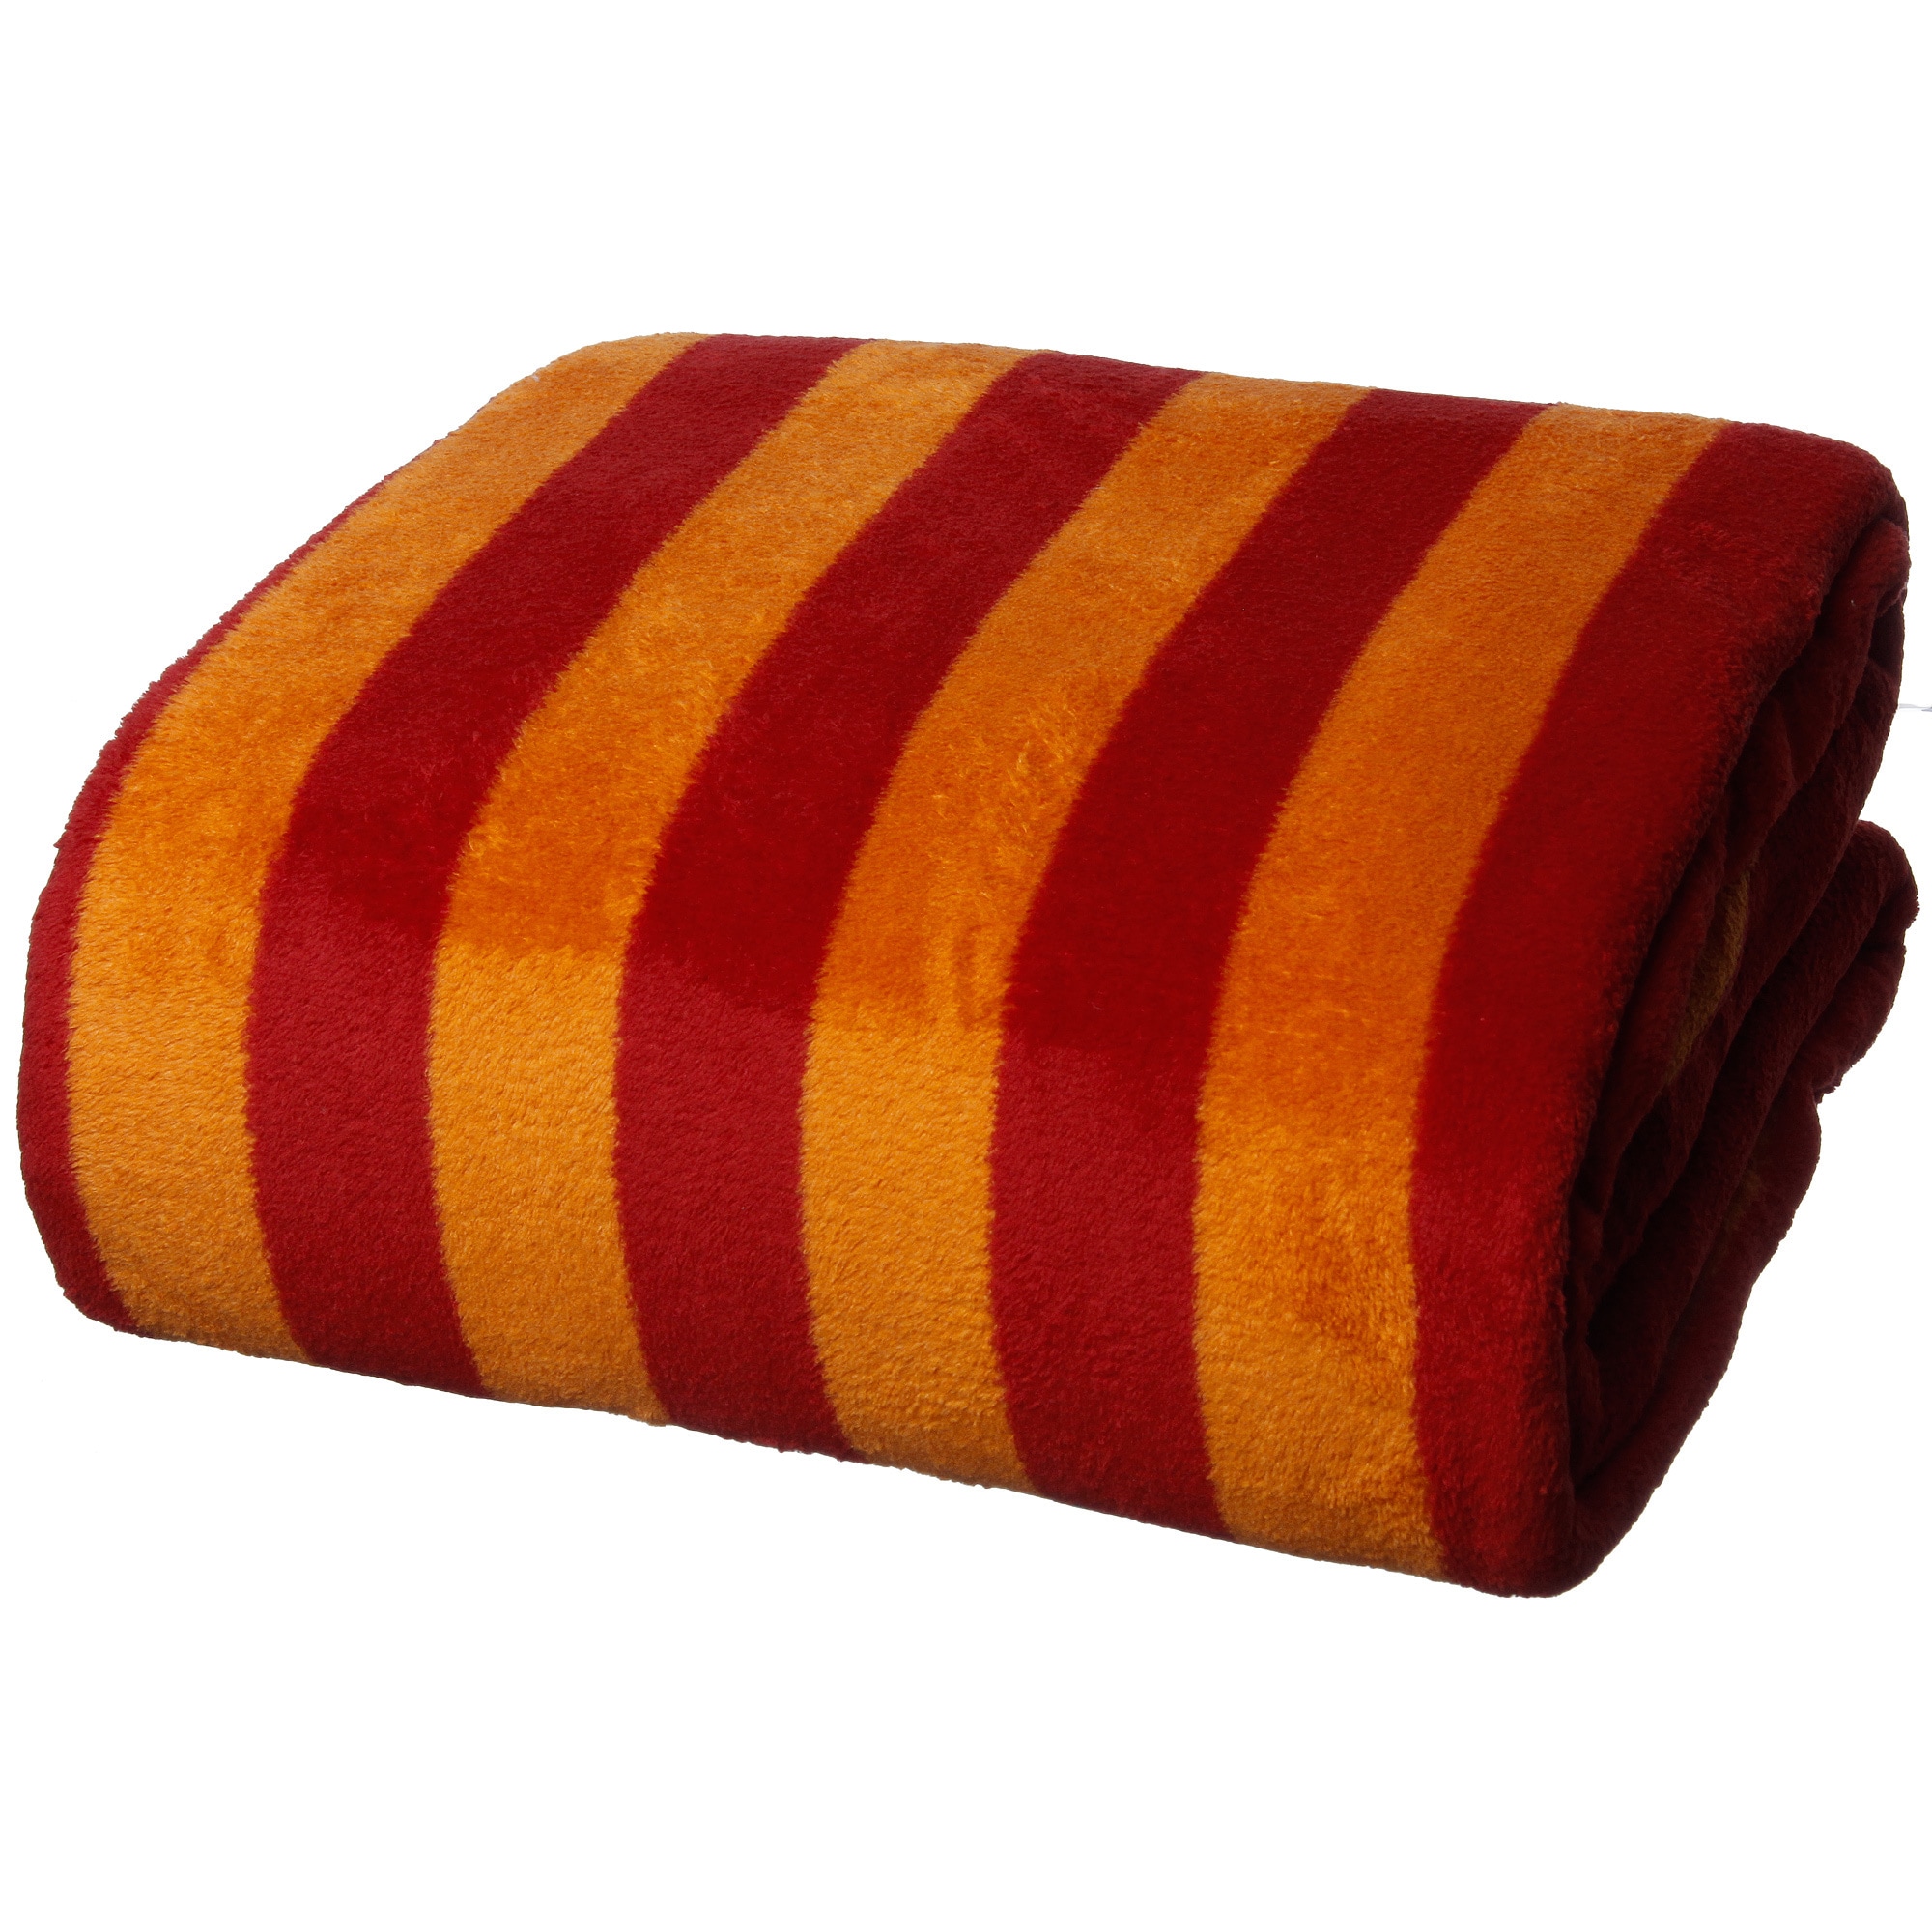 Lcm Home Fashions, Inc. Luxury Printed Stripe Microplush Blanket Red Size Twin